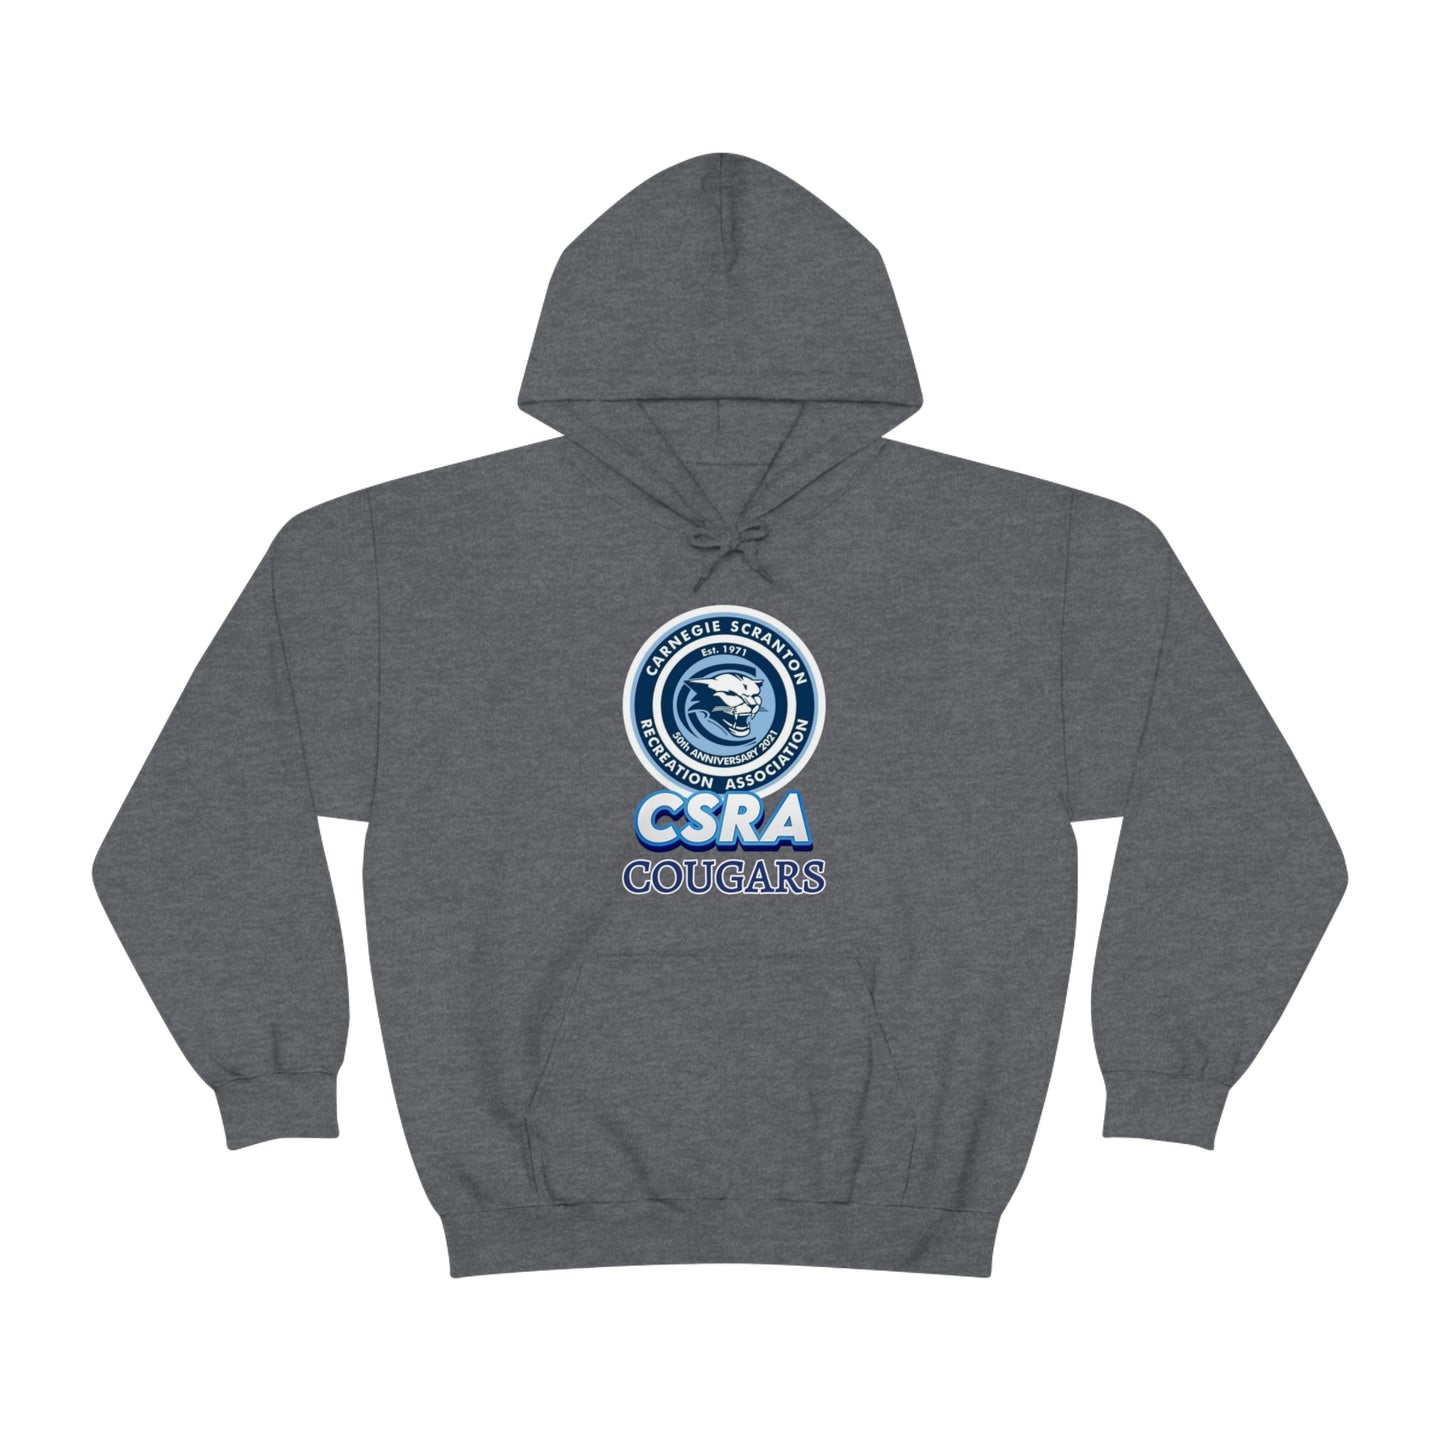 CSRA Cougars Unisex Hooded Sweatshirt